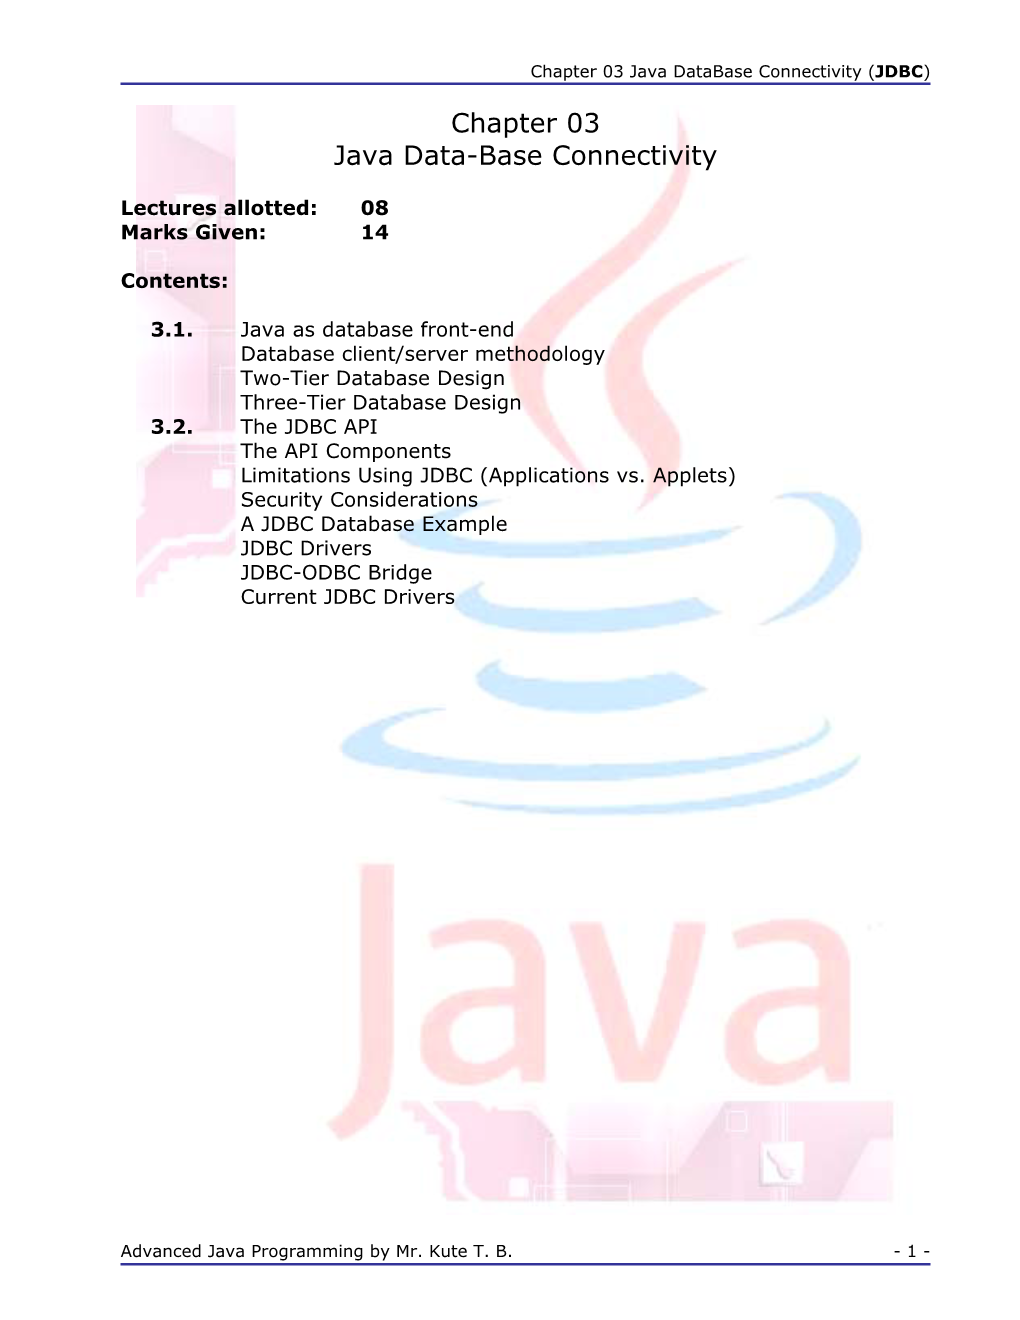 Chapter 03 Java Data-Base Connectivity